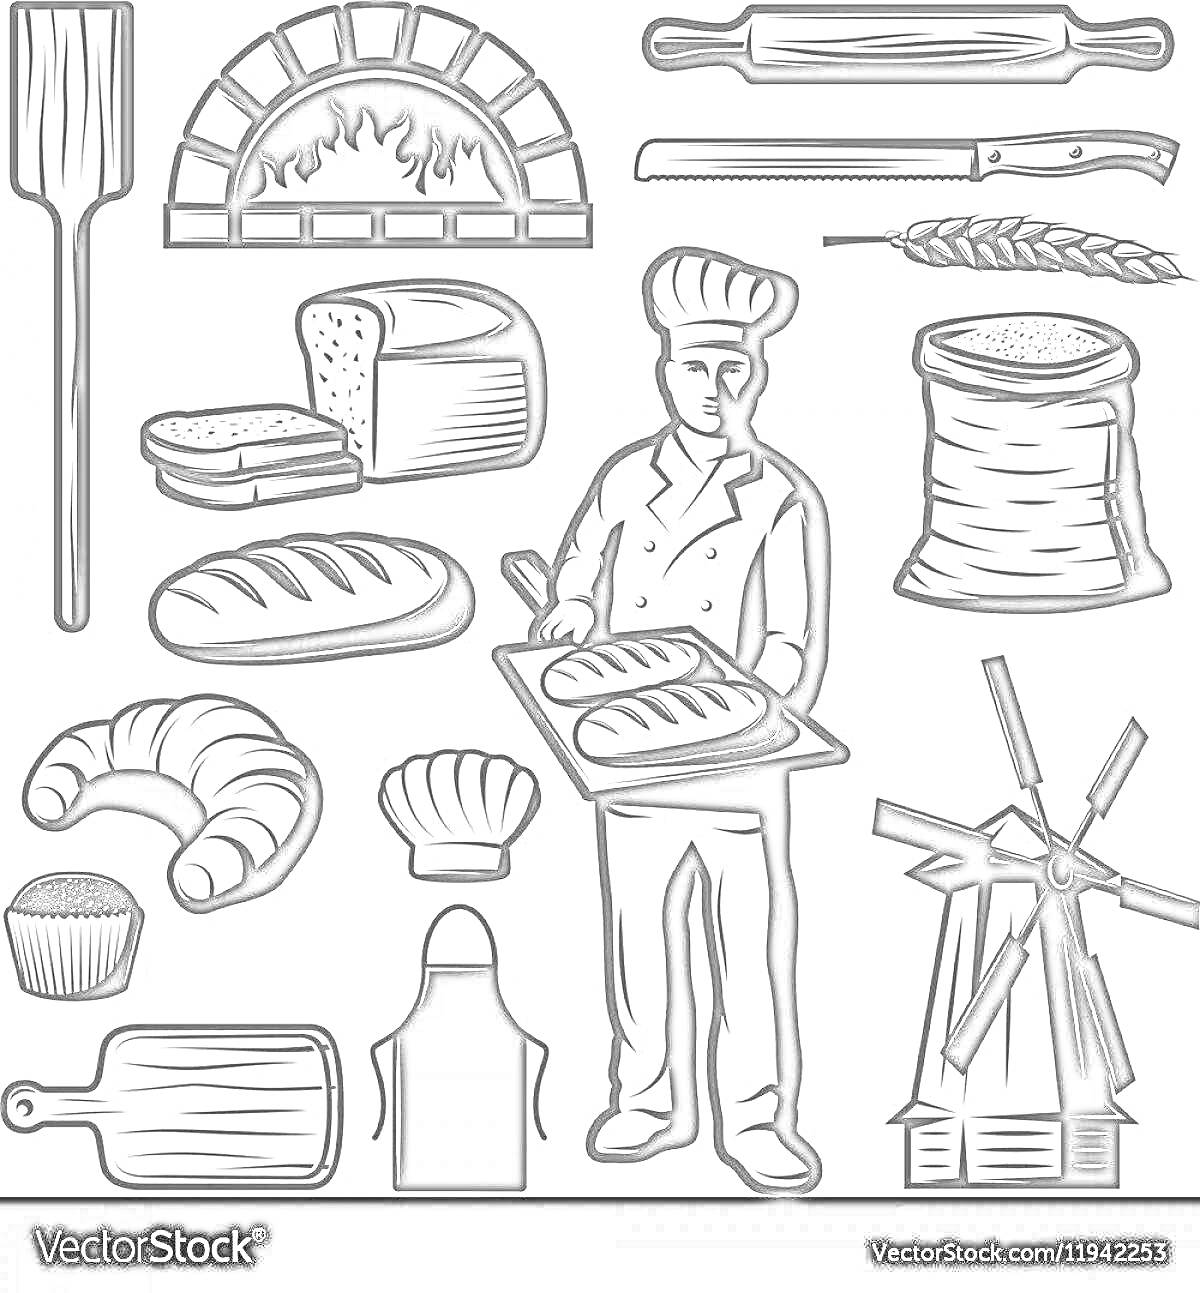 На раскраске изображено: Пекарь, Хлеб, Тесто, Багет, Булочка, Каравай, Мука, Мельница, Скалка, Кухонный фартук